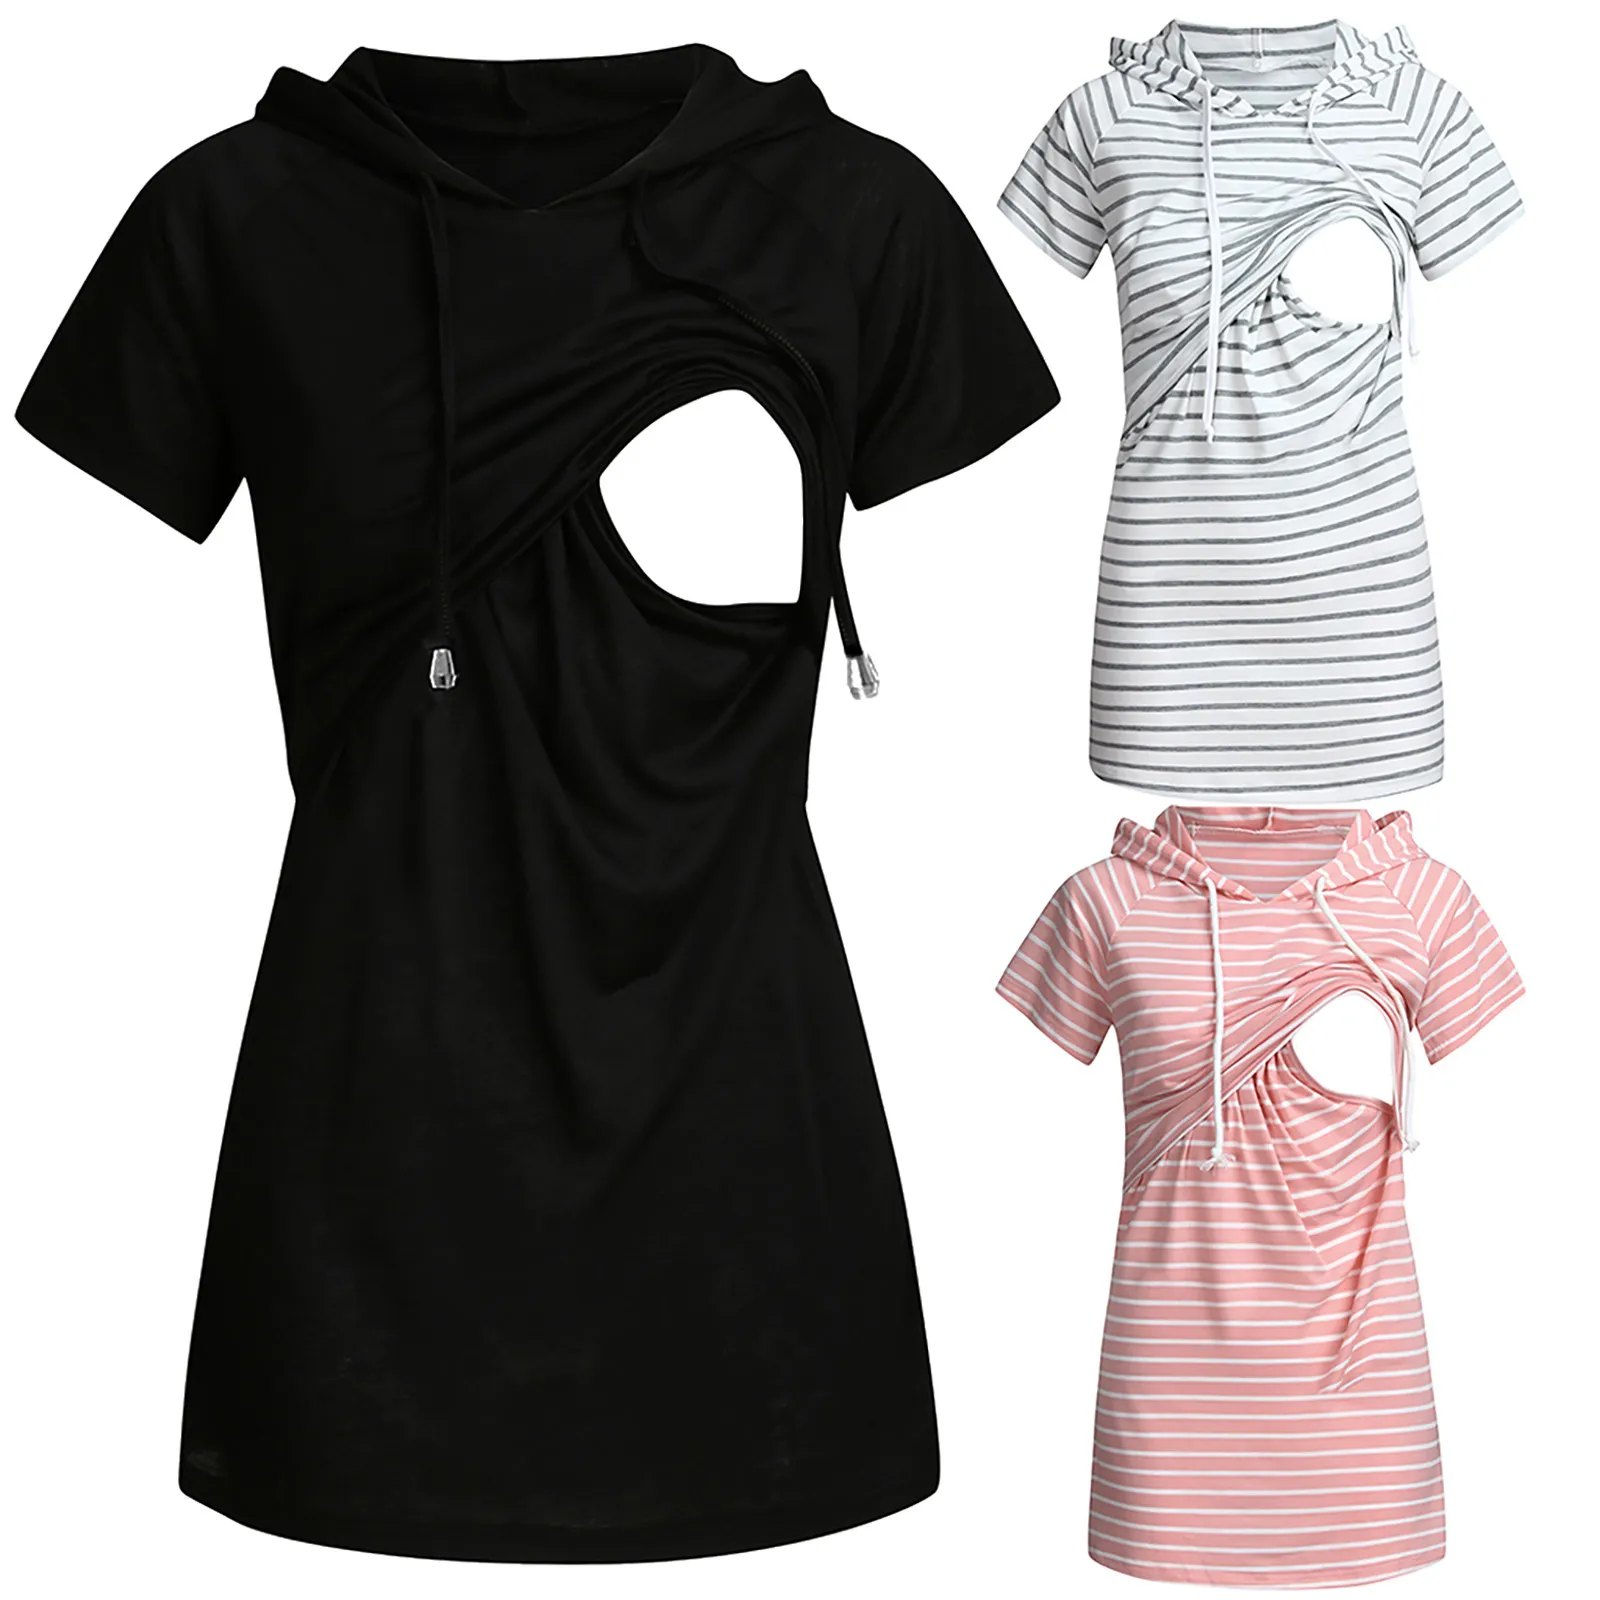 

Women Maternity Striped Maternity Top Short Sleeve Hooded Nursing T-shirt umstandsmode shirt camisetas lactancia de verano